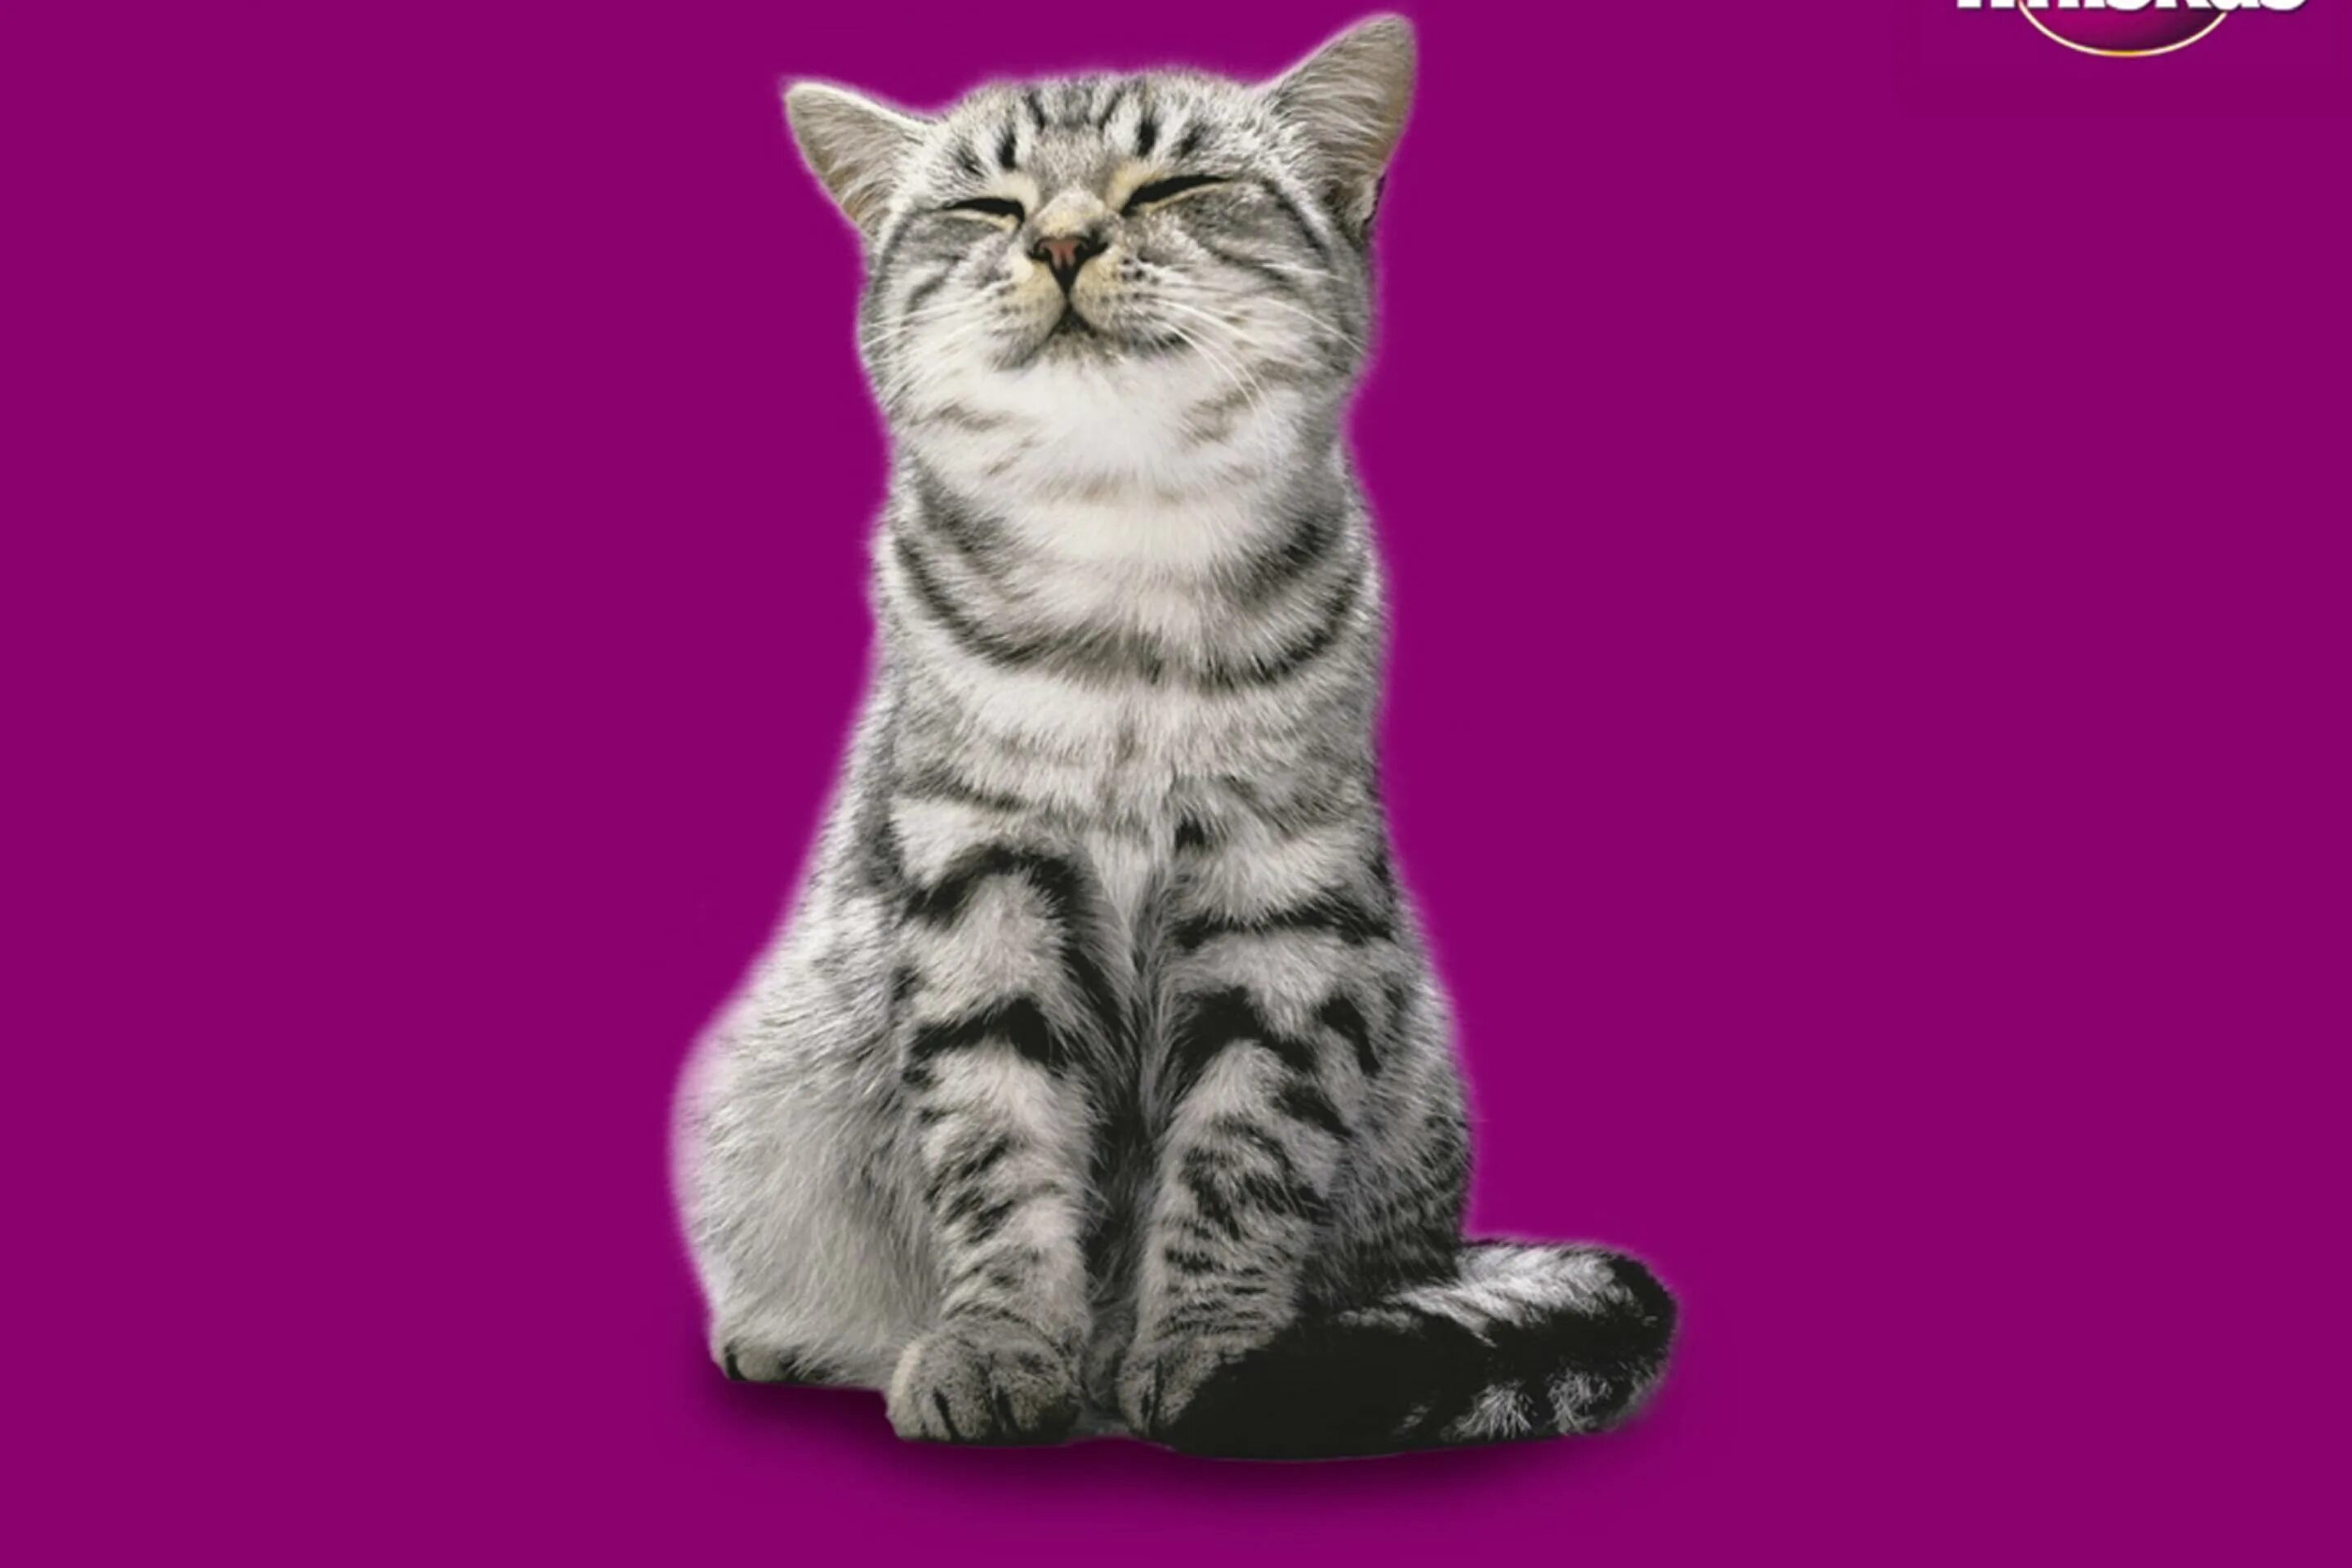 Музыка из рекламы вискас. Кошка вискас. Кот вискас порода вискаса. Порода кошки из рекламы вискас. Кошка с вискаса порода рекламы вискас.